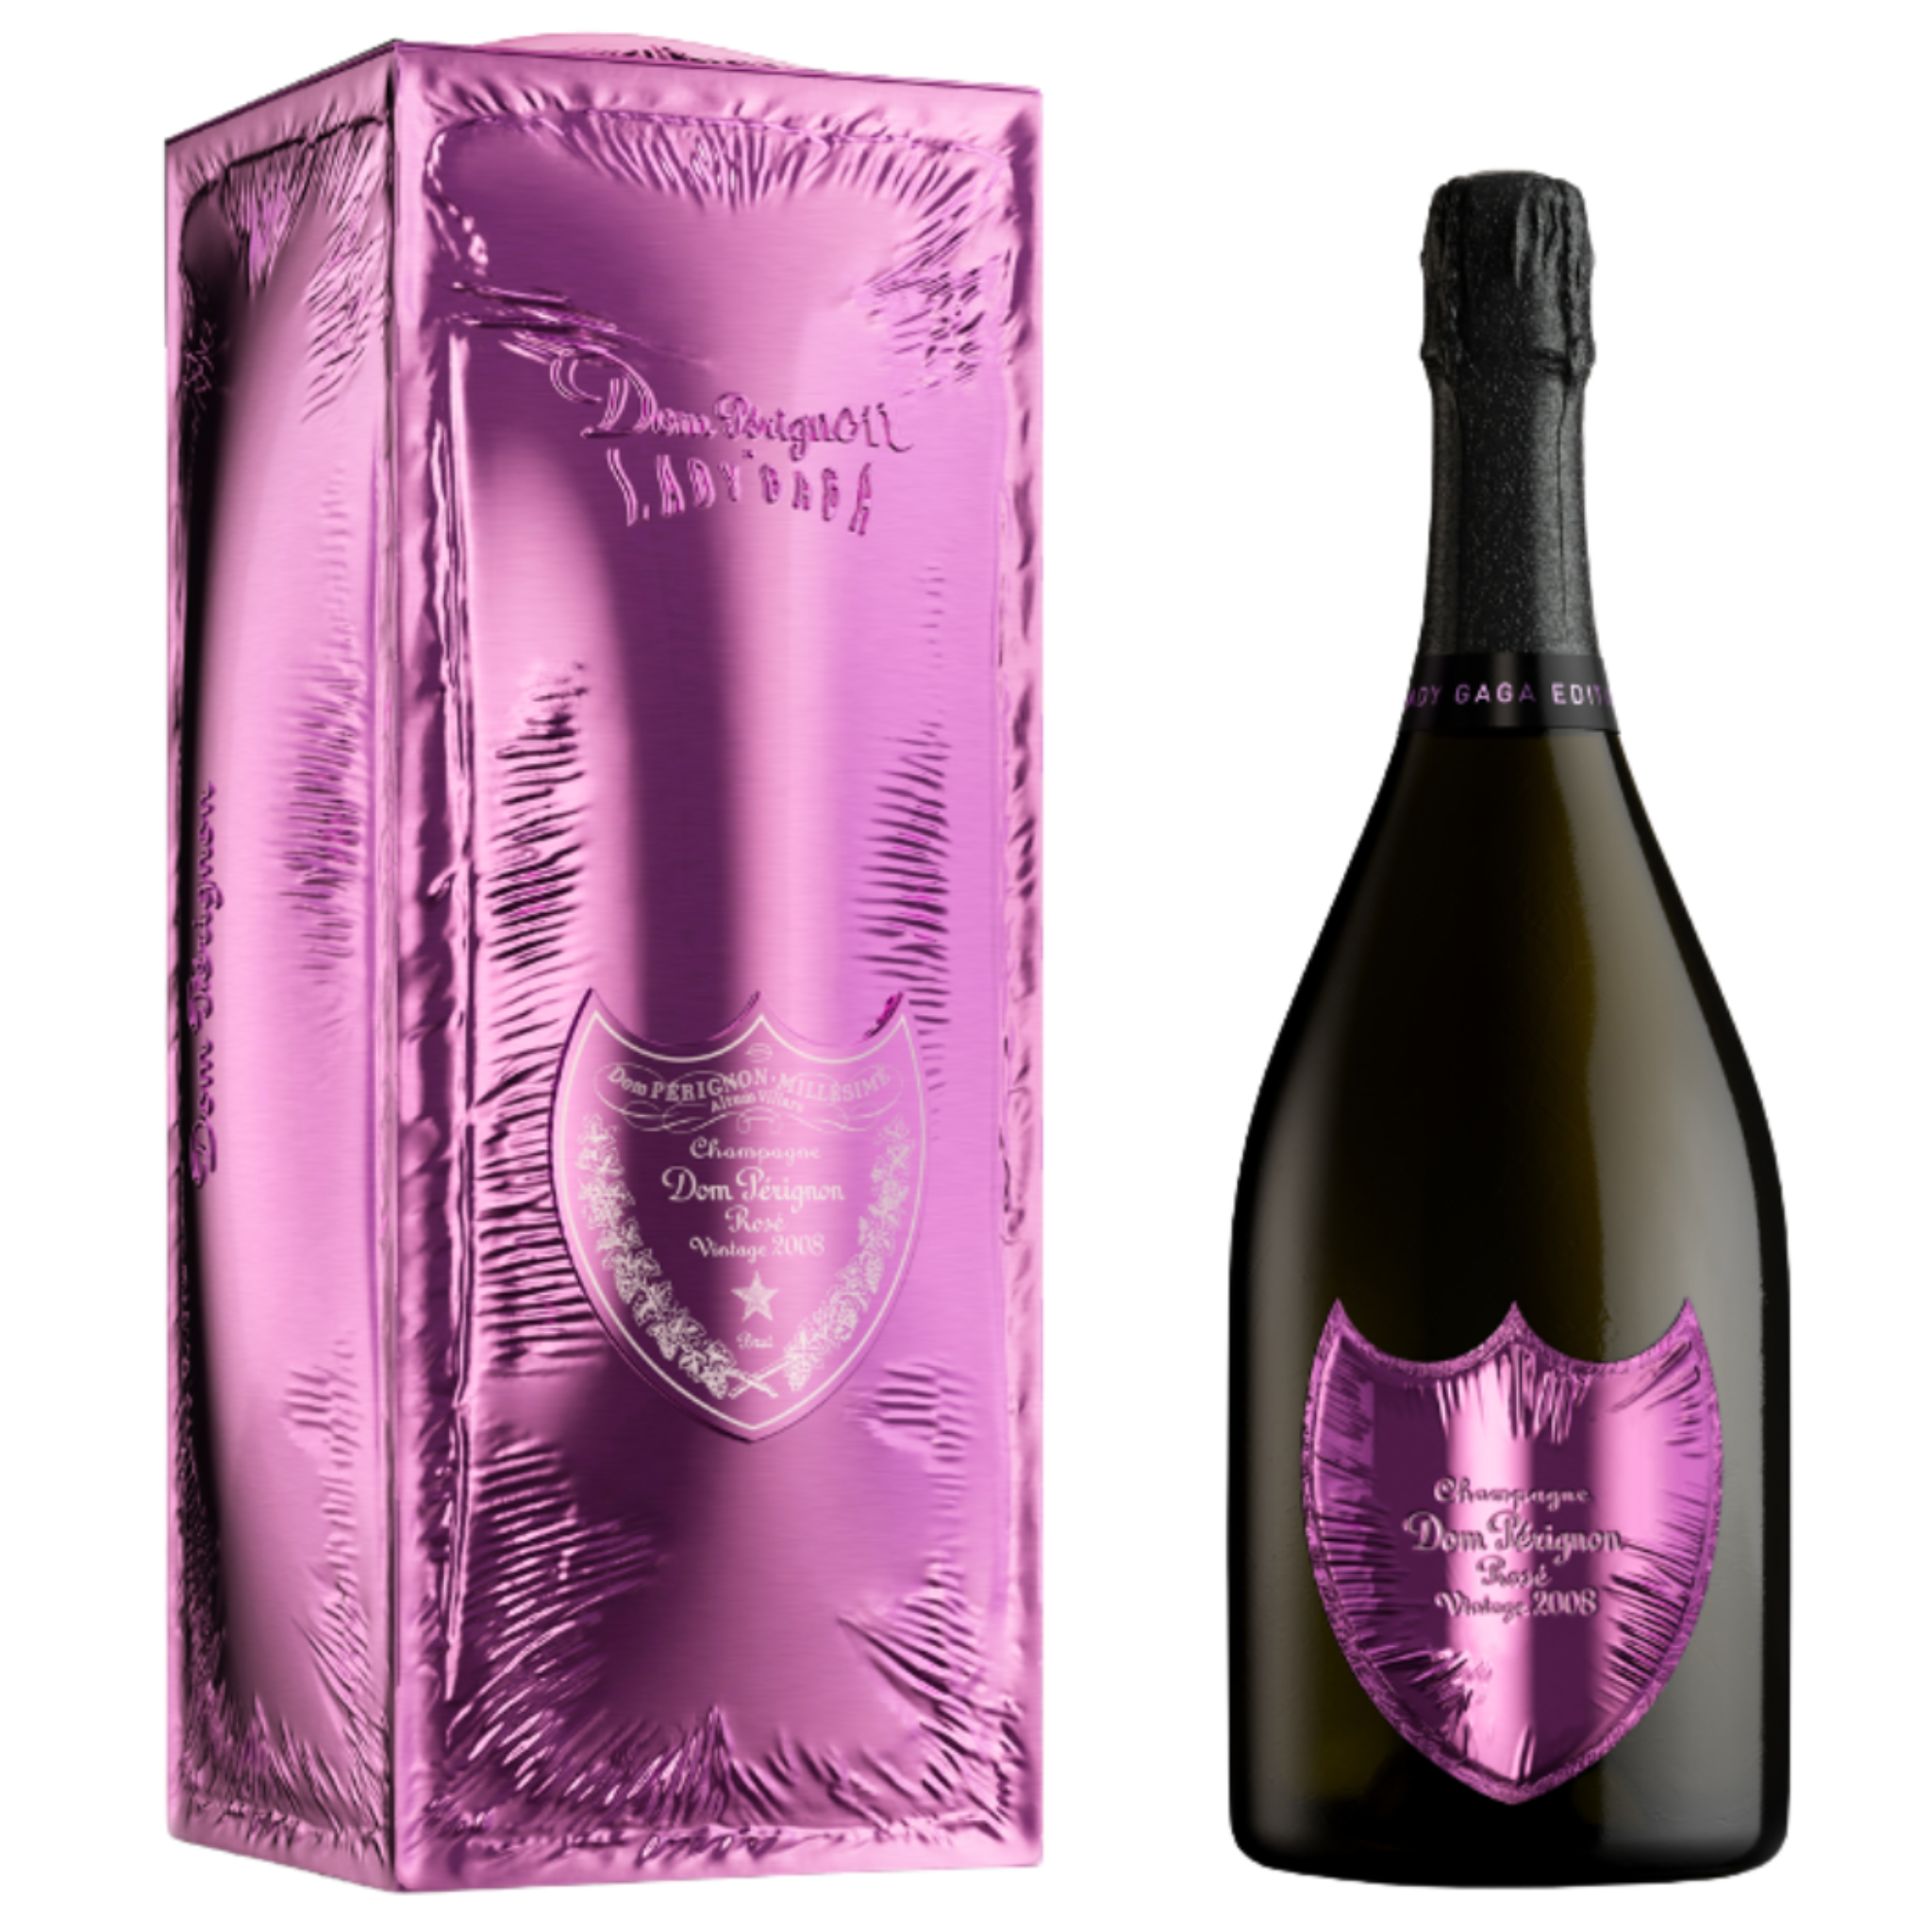 Dom Pérignon Rose Champagne Lady Gaga Limited Edition 2008